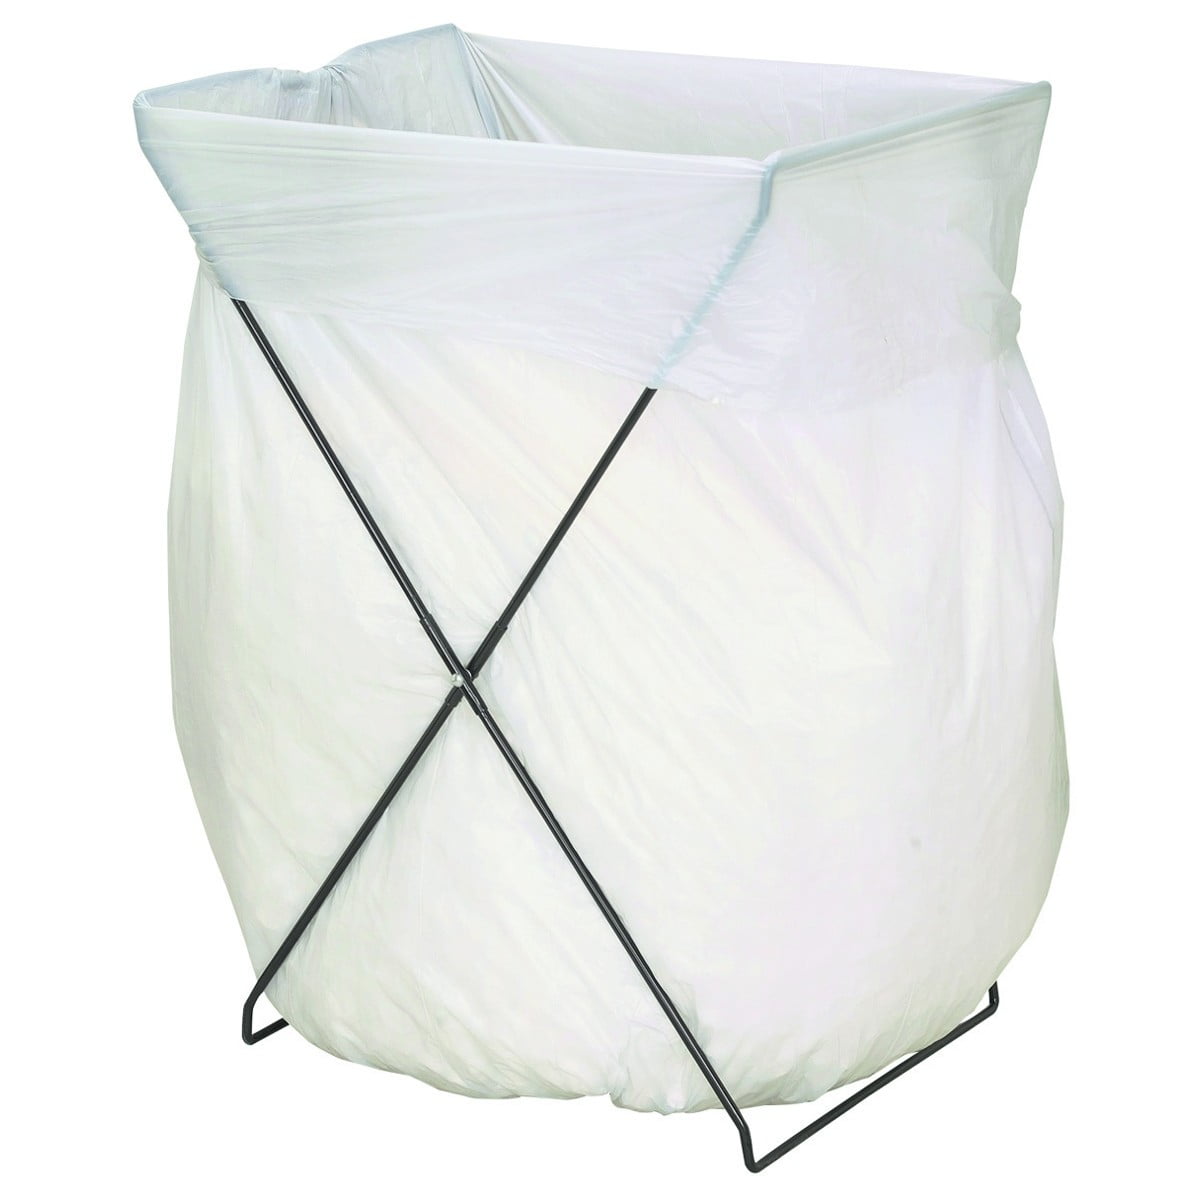 Folding Garbage Bag Frame Holder Portable Fold Up Trash Can Stand for Camping 